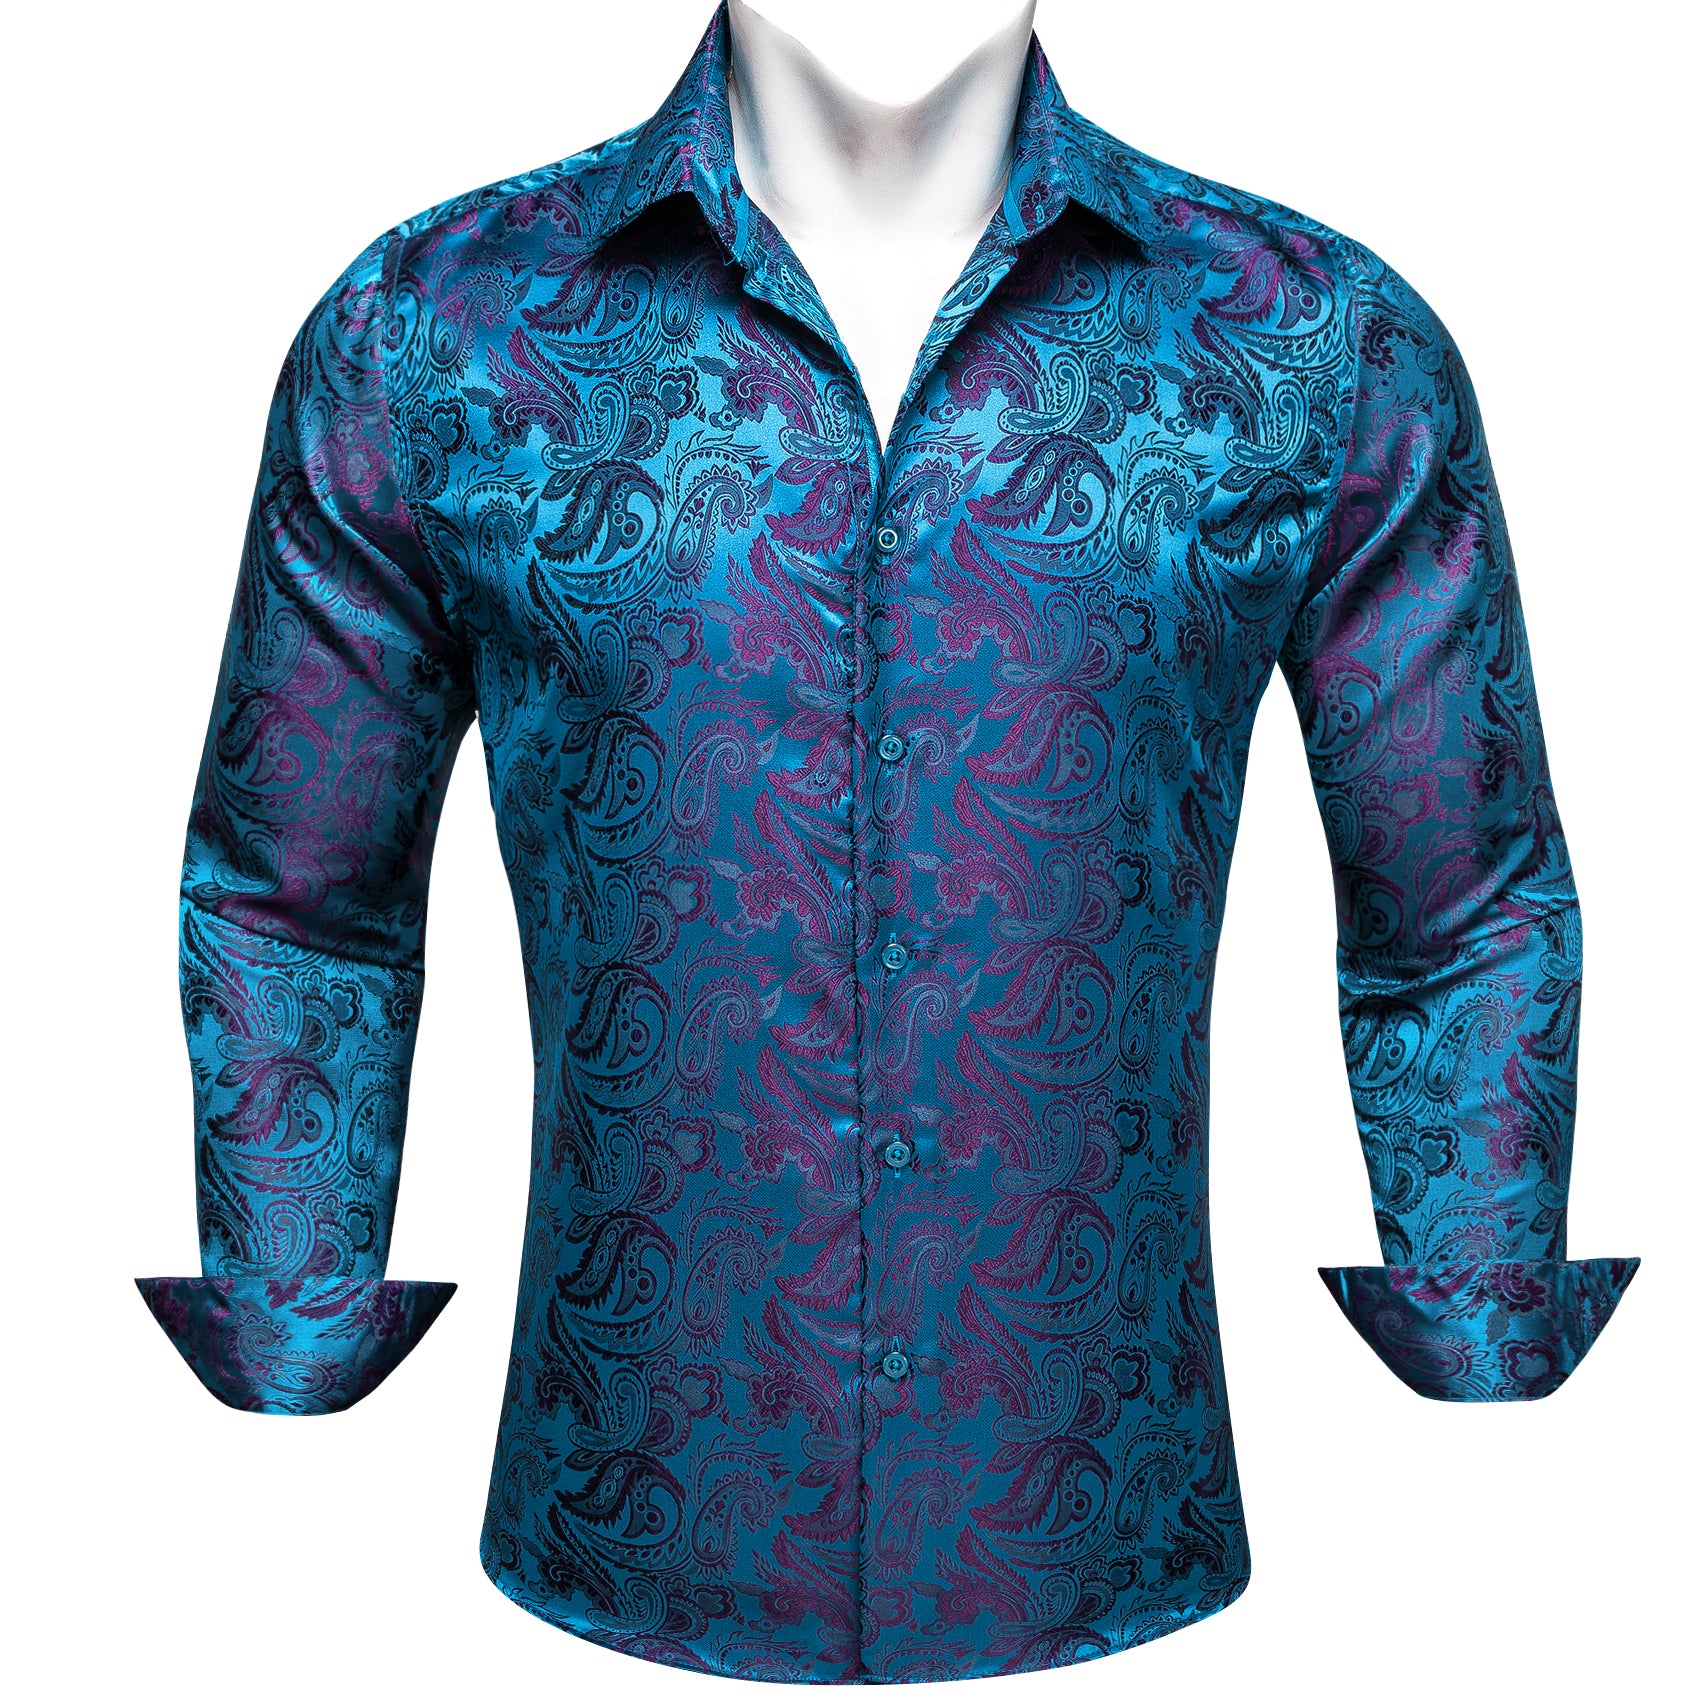 Barry.wang Blue Purple Paisley Silk Men's Shirt